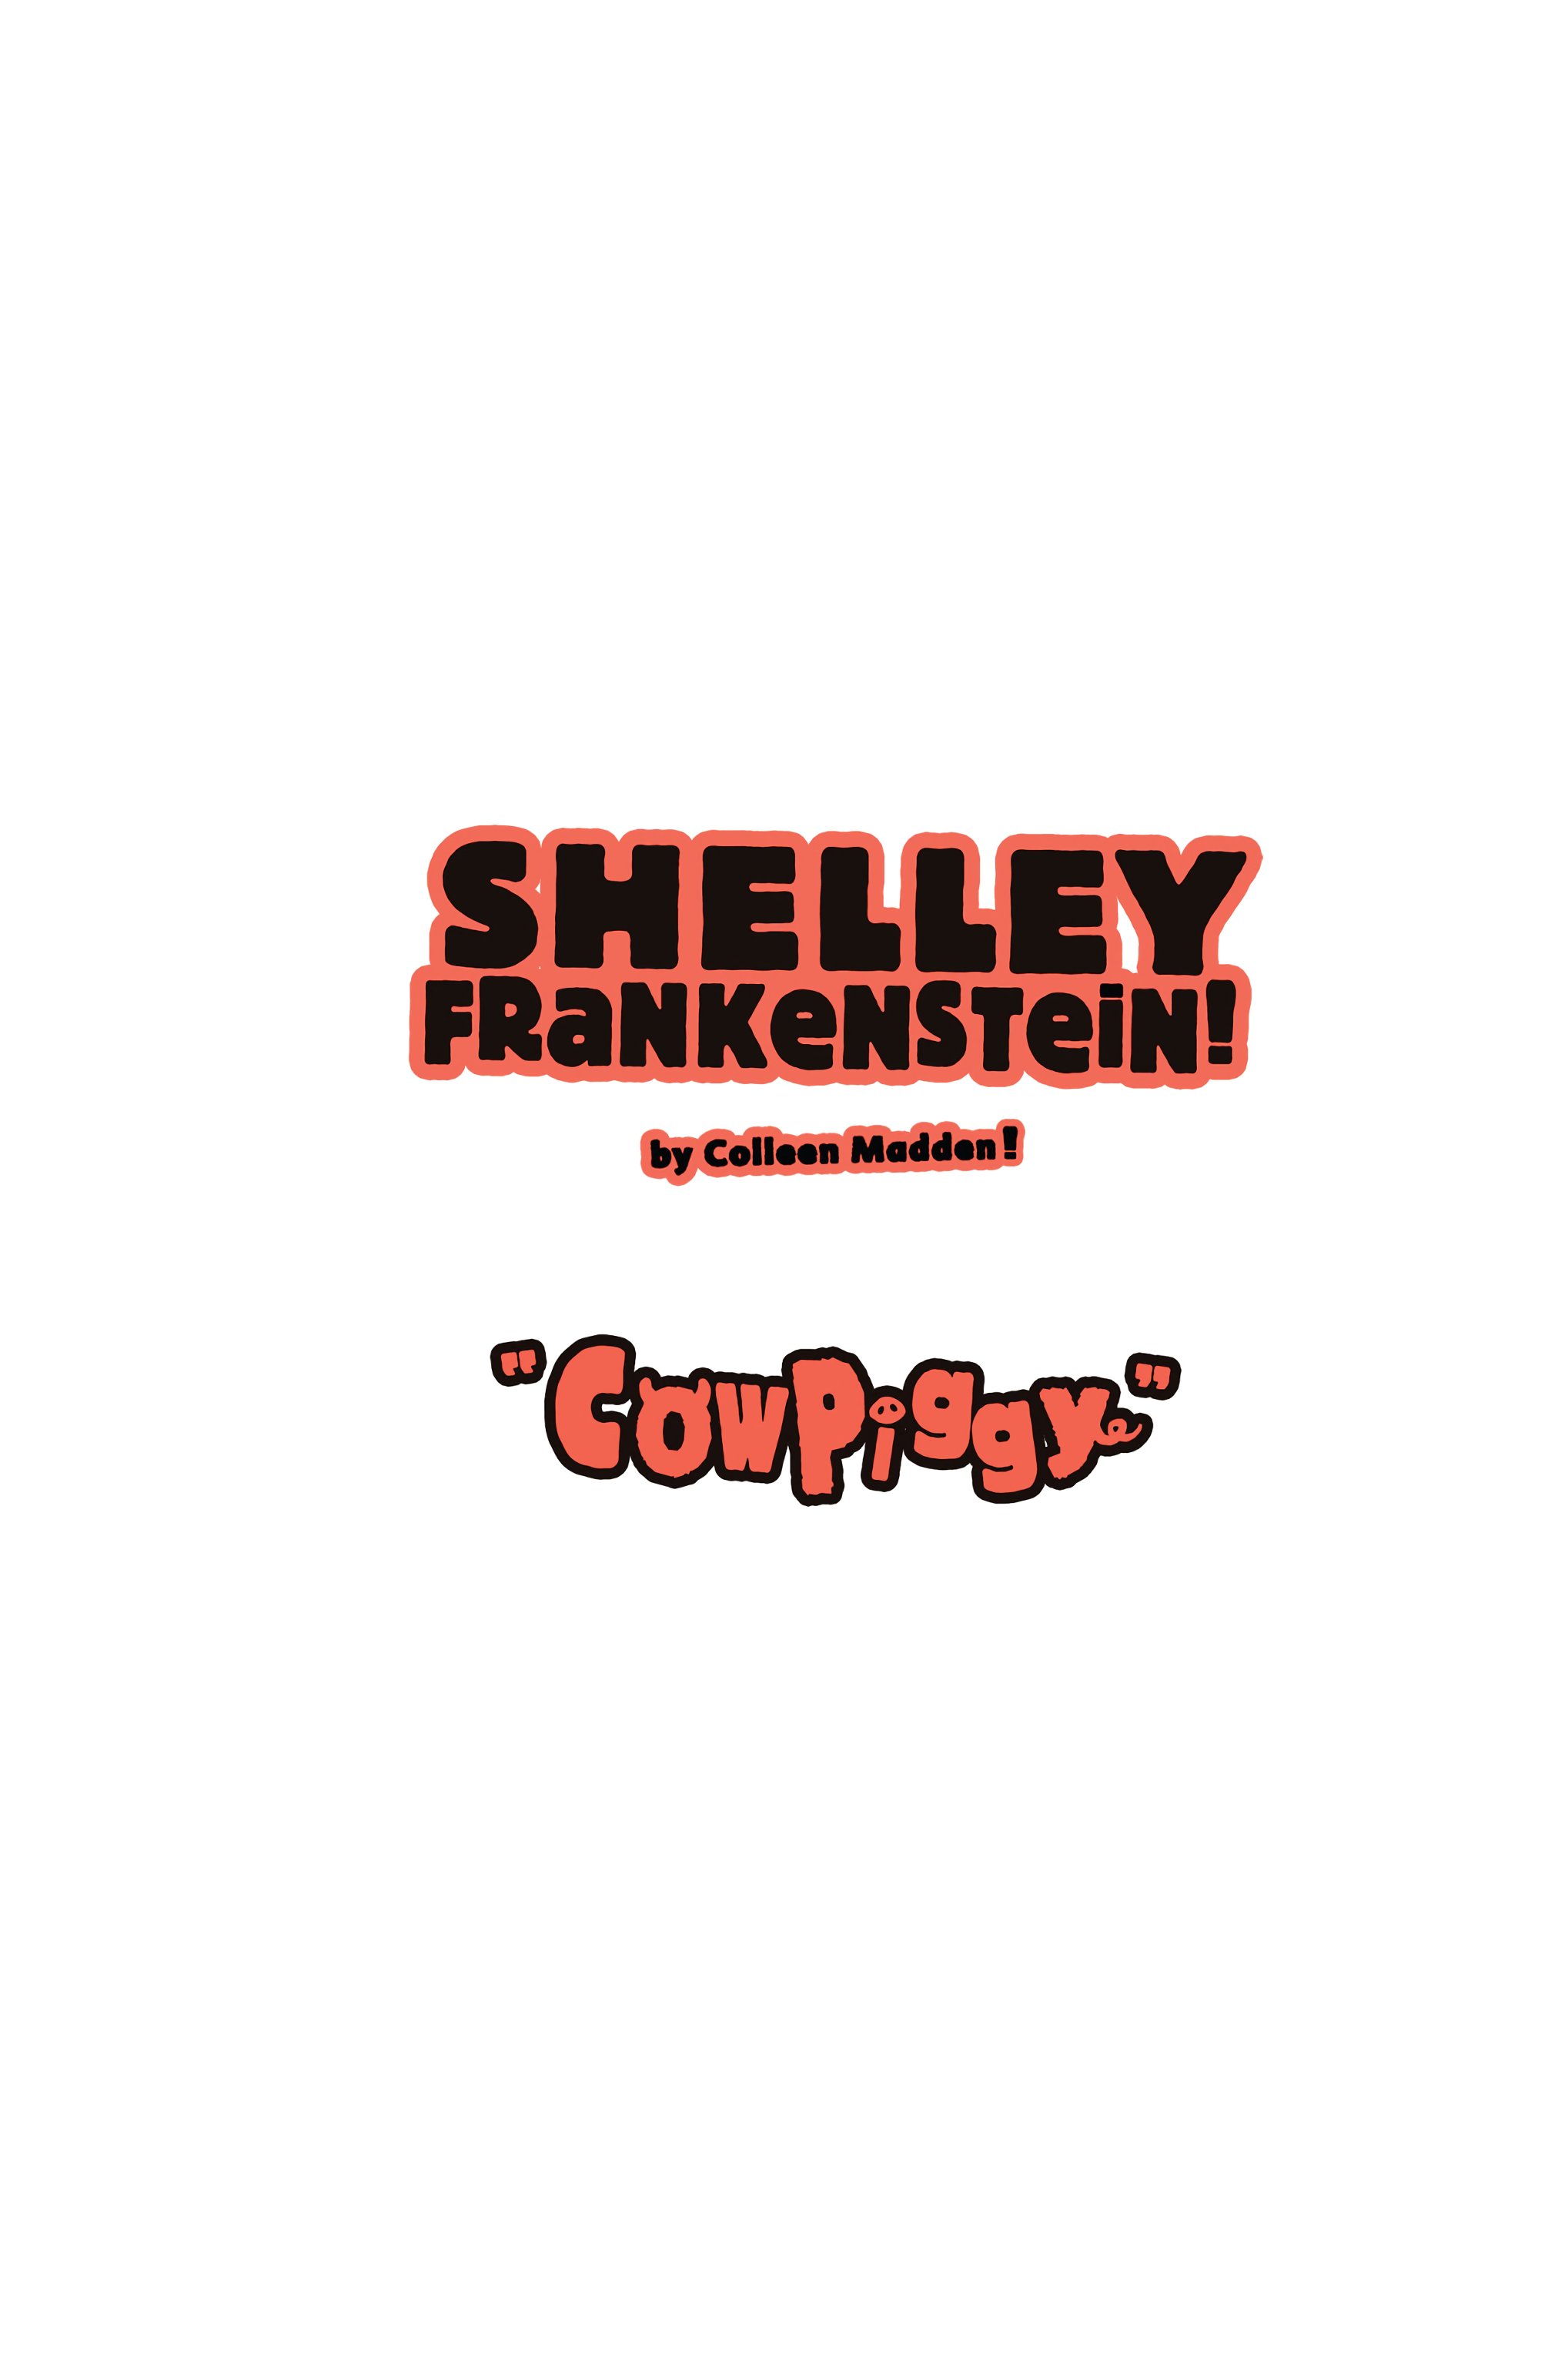 Read online Shelley Frankenstein!: CowPiggy comic -  Issue # TPB (Part 1) - 4